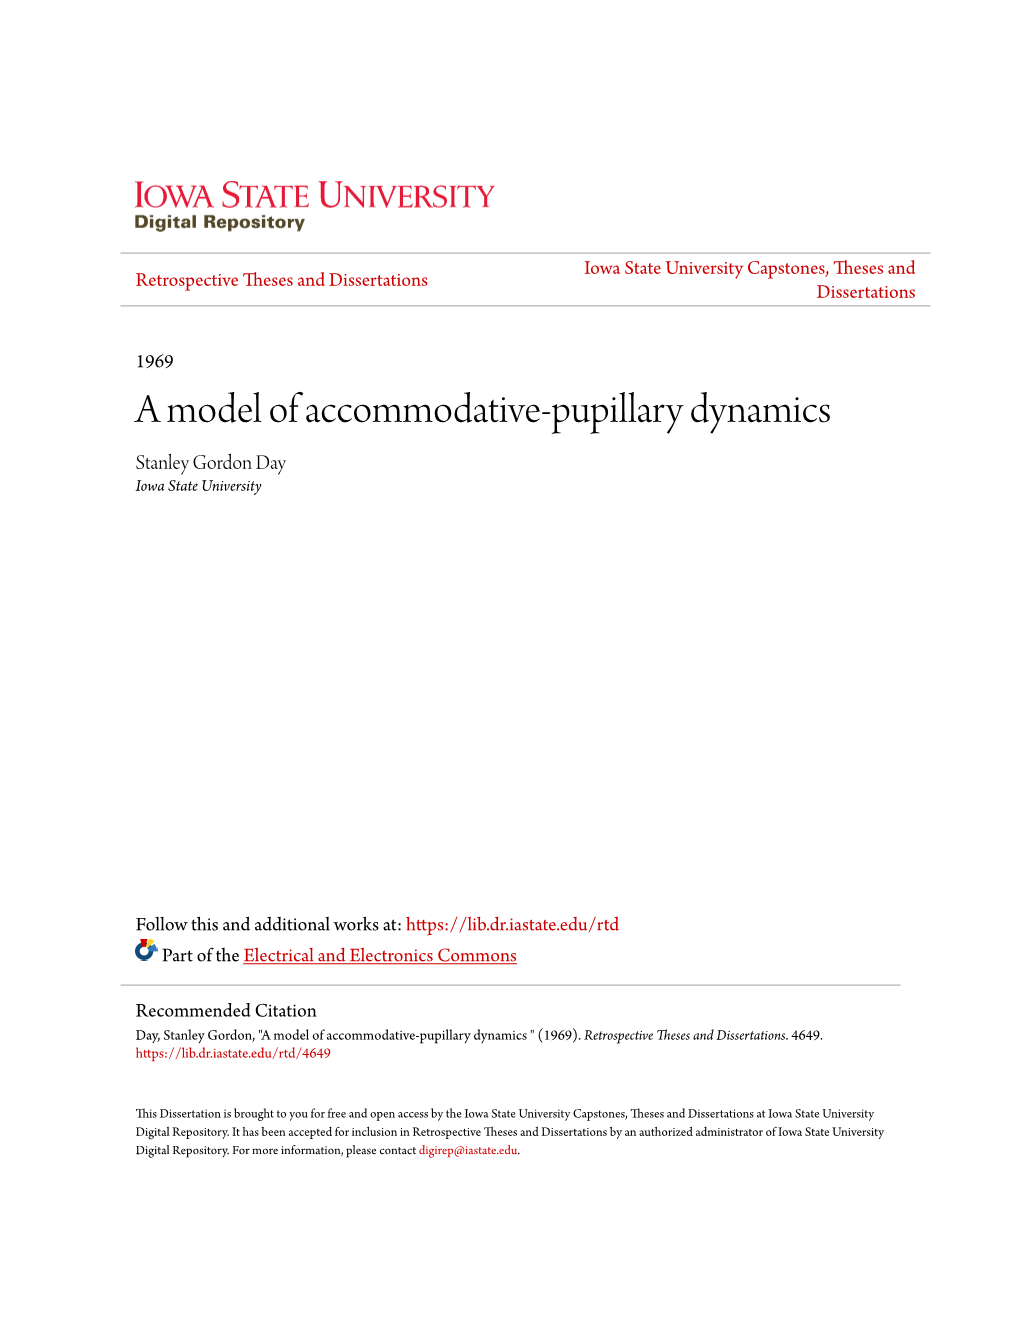 A Model of Accommodative-Pupillary Dynamics Stanley Gordon Day Iowa State University